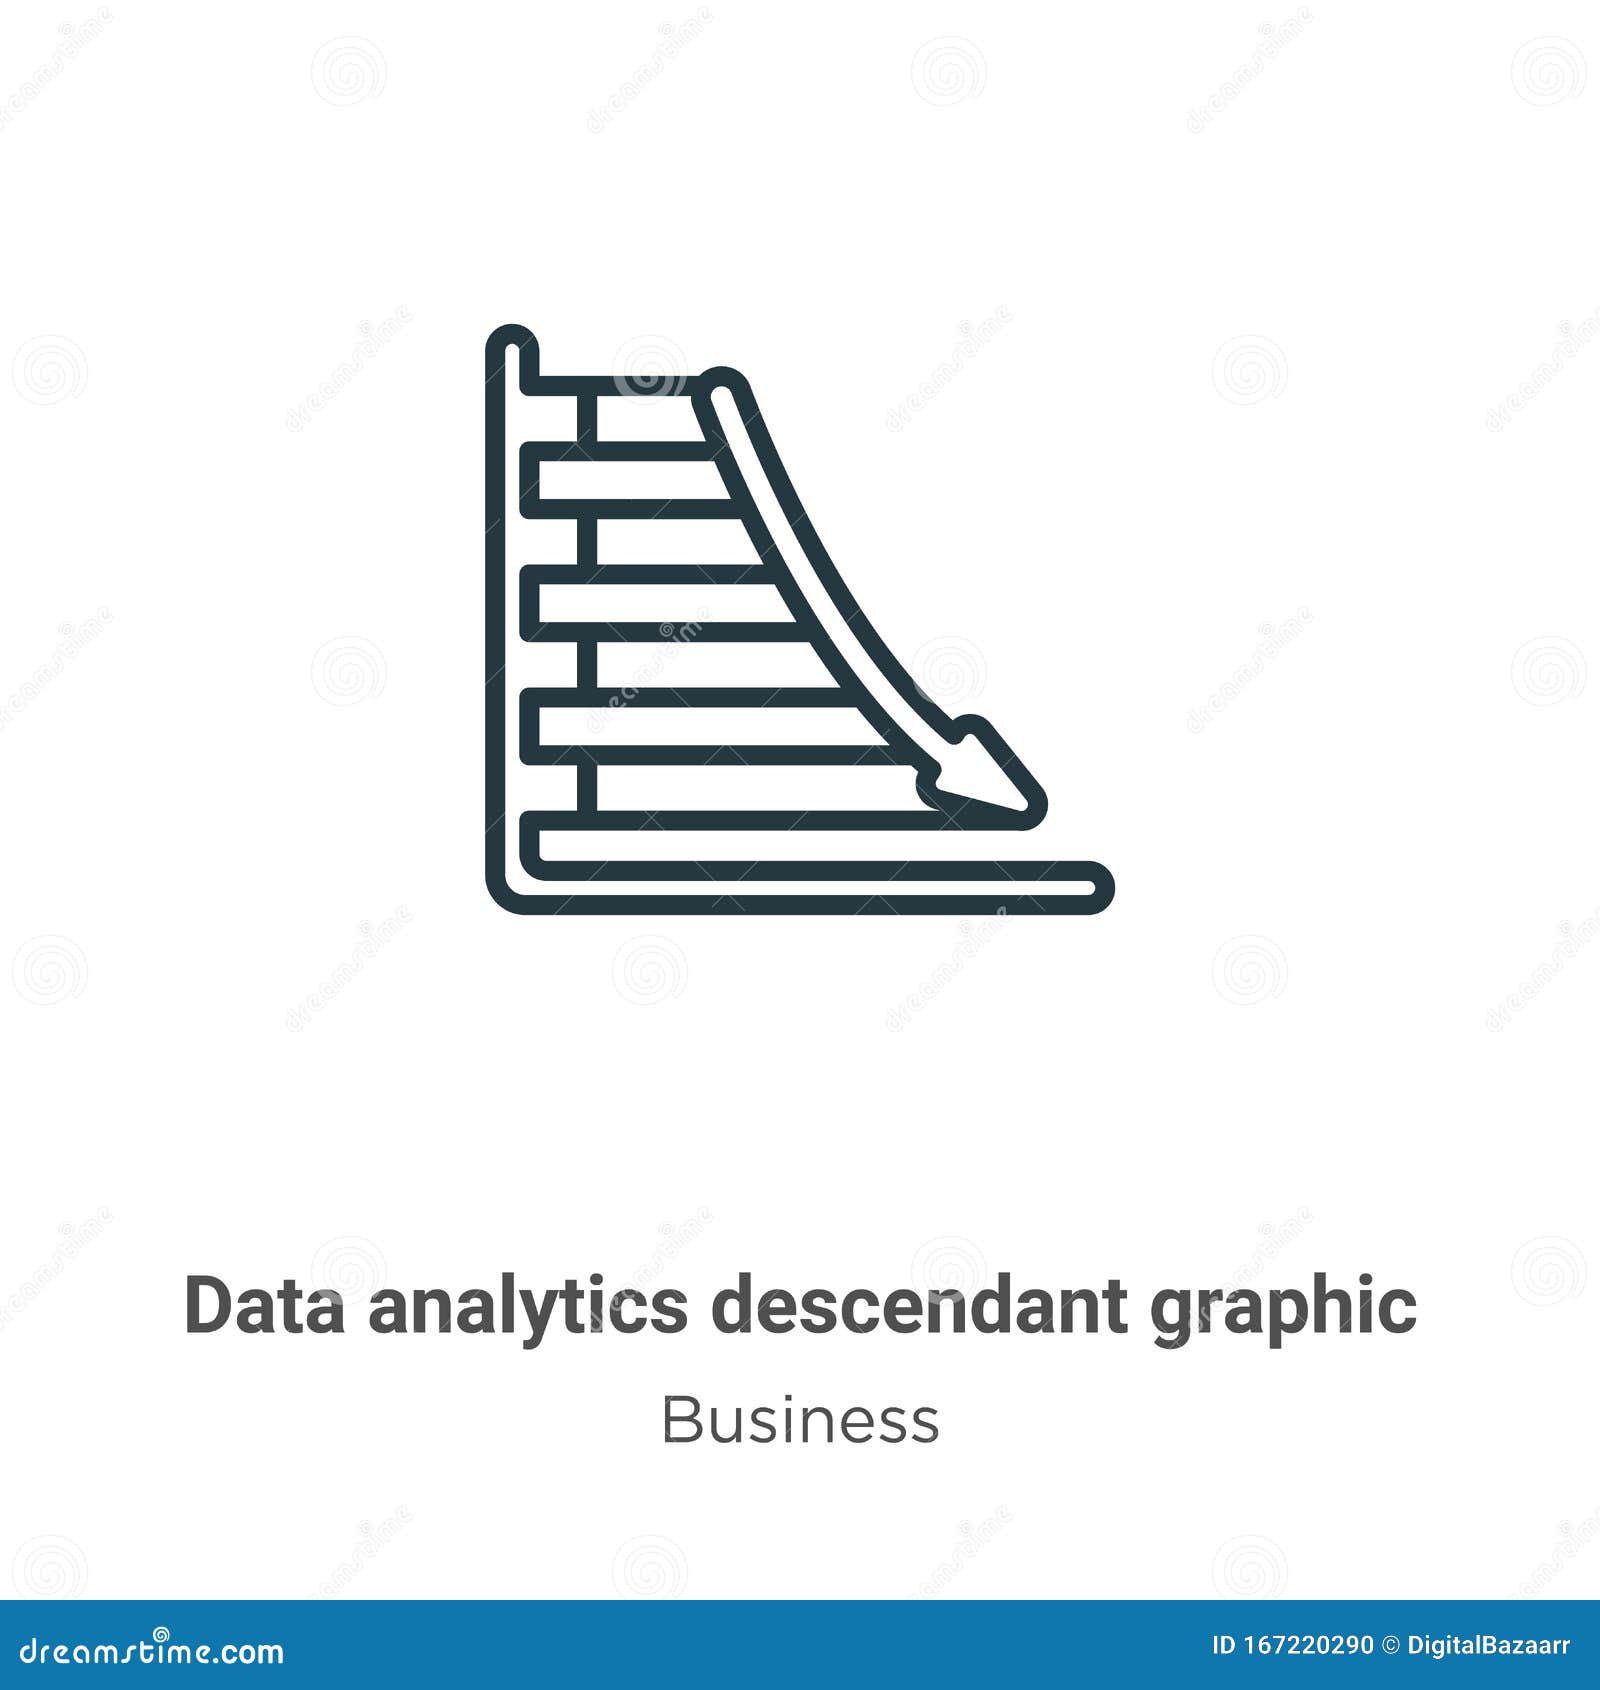 data analytics descendant graphic outline  icon. thin line black data analytics descendant graphic icon, flat  simple